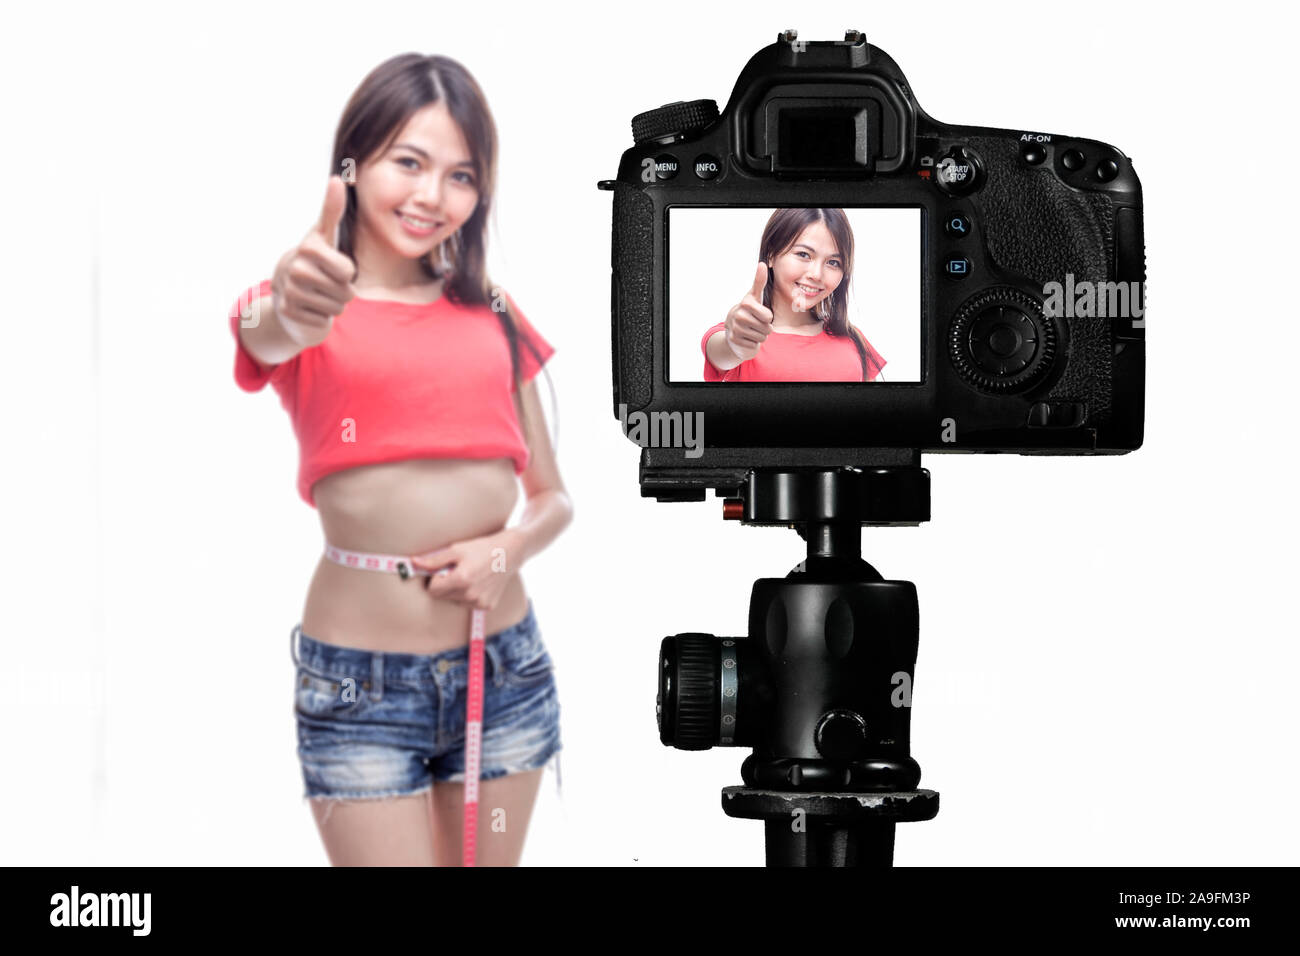 Asiatische vlogger messen Taille hinter der Kamera, social media Produktion Konzept Stockfoto